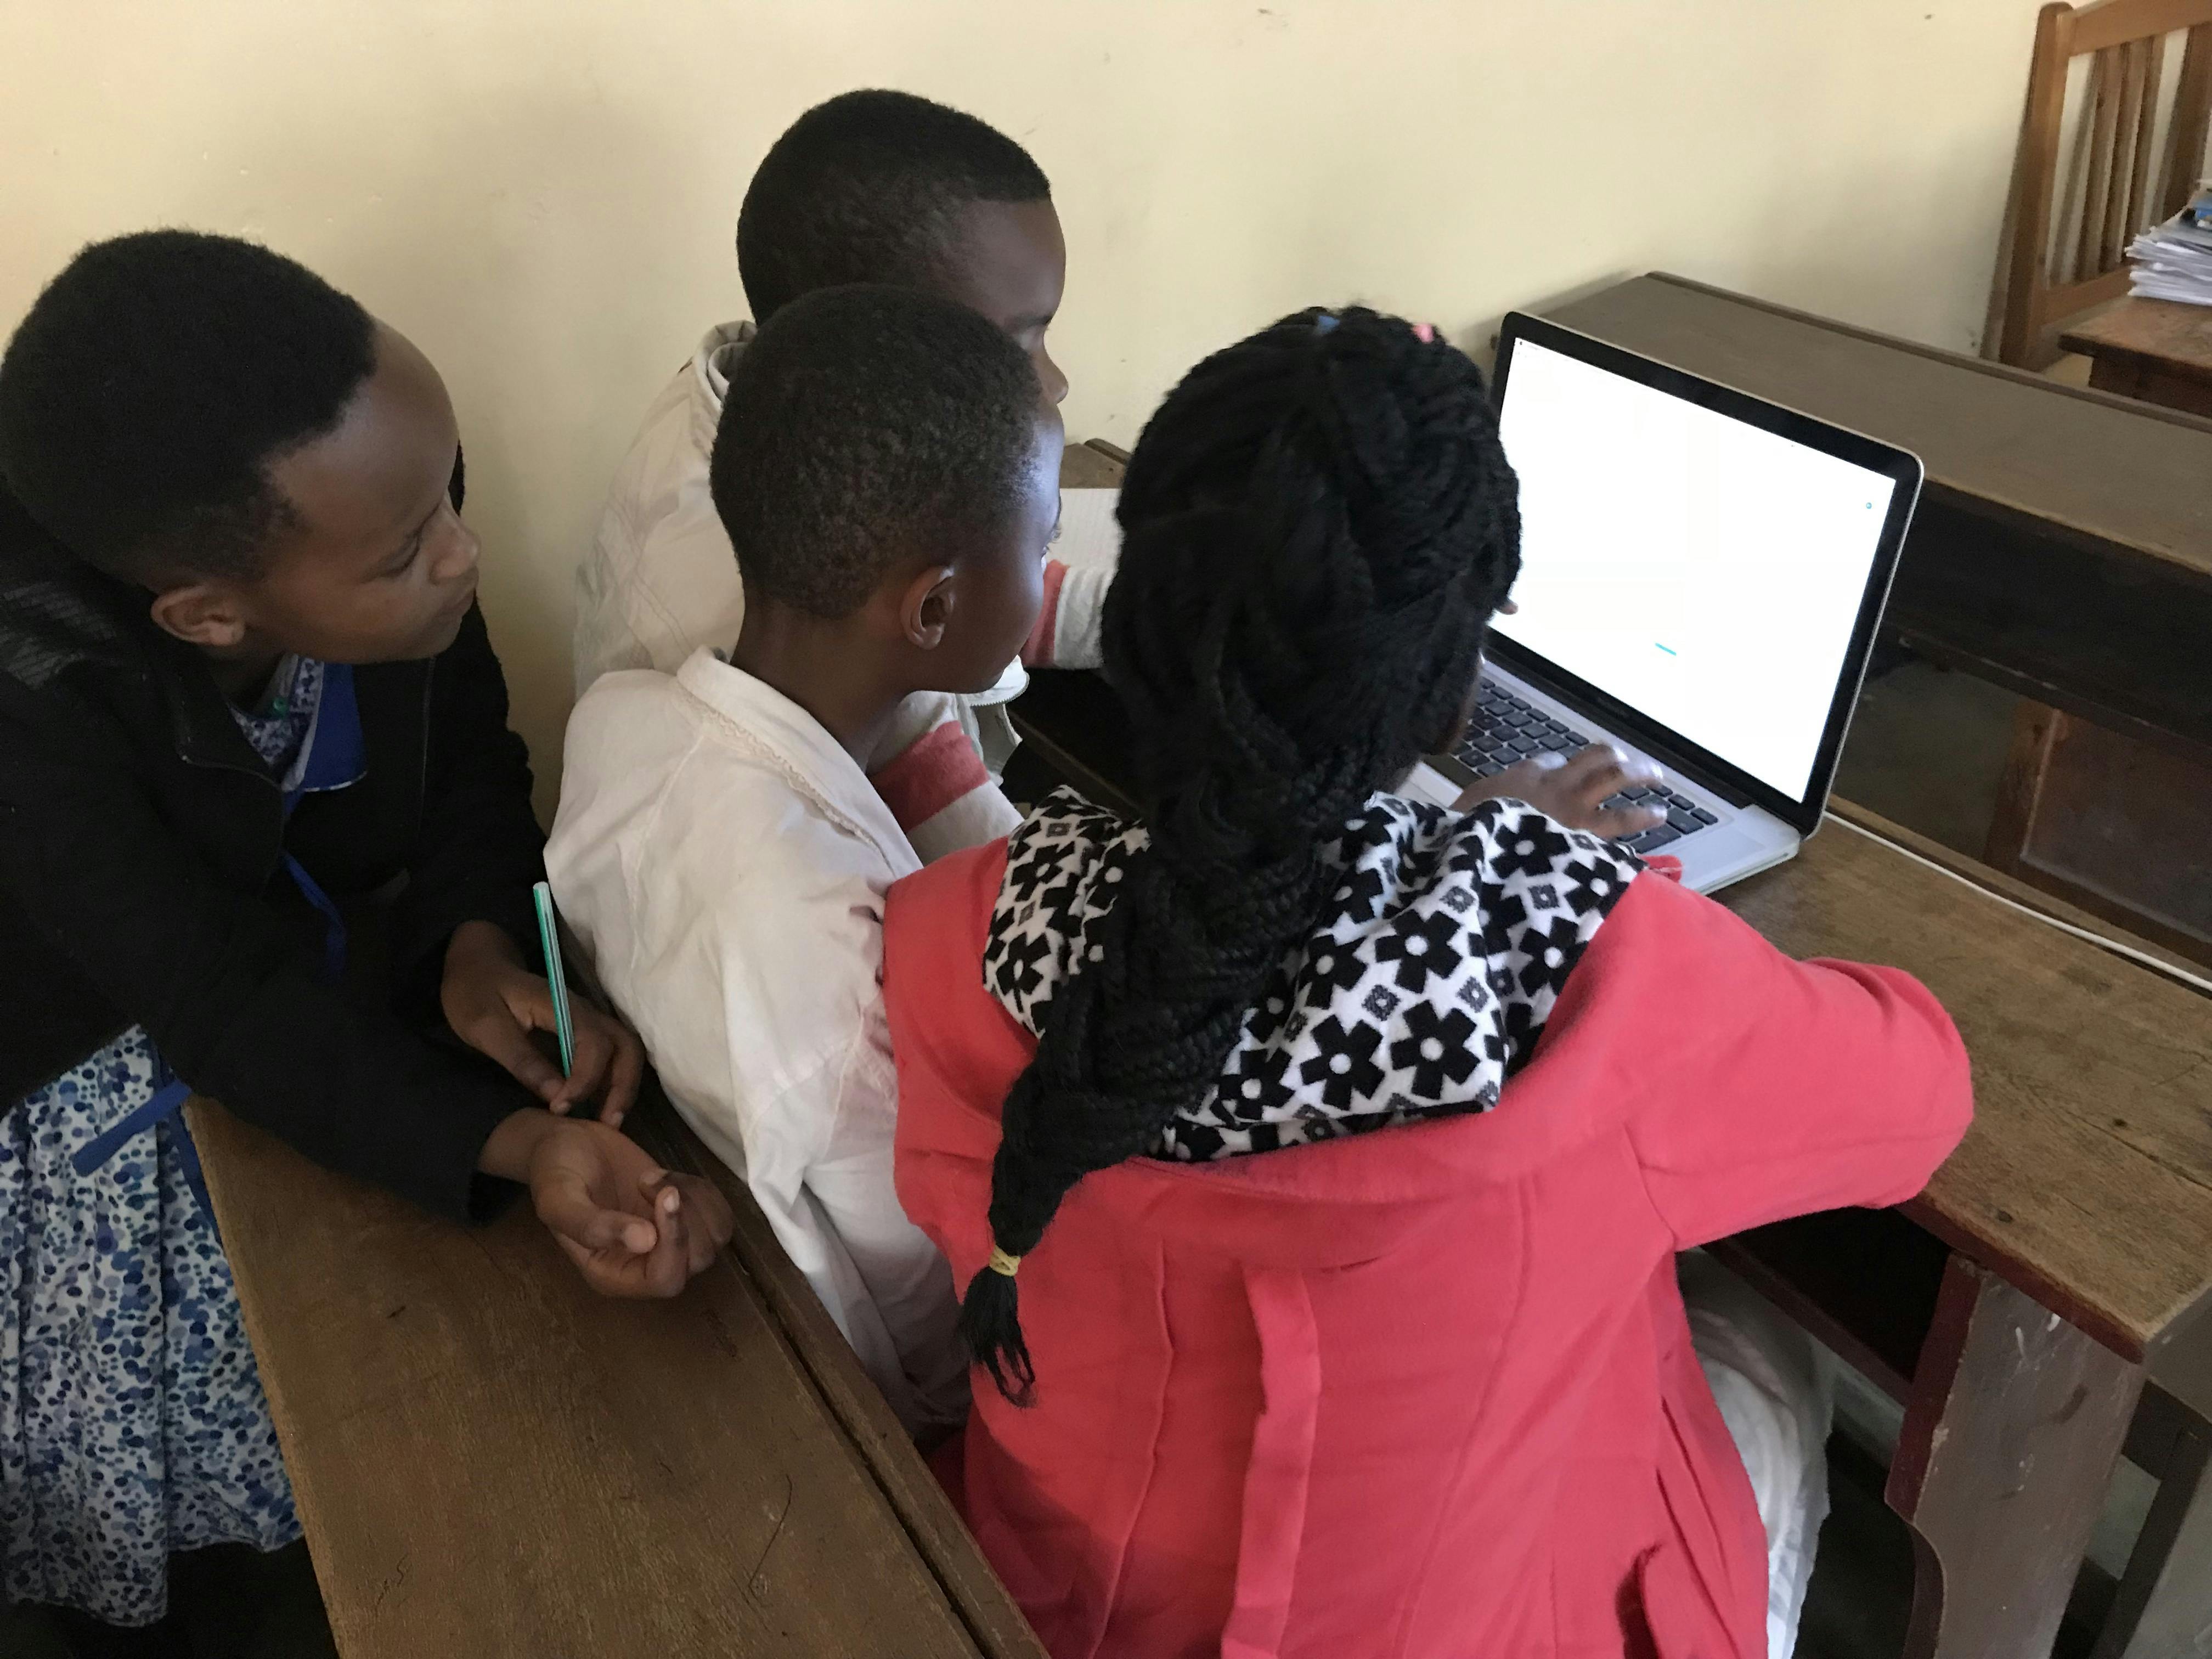 Youth Development & Education Internships in Tanzania